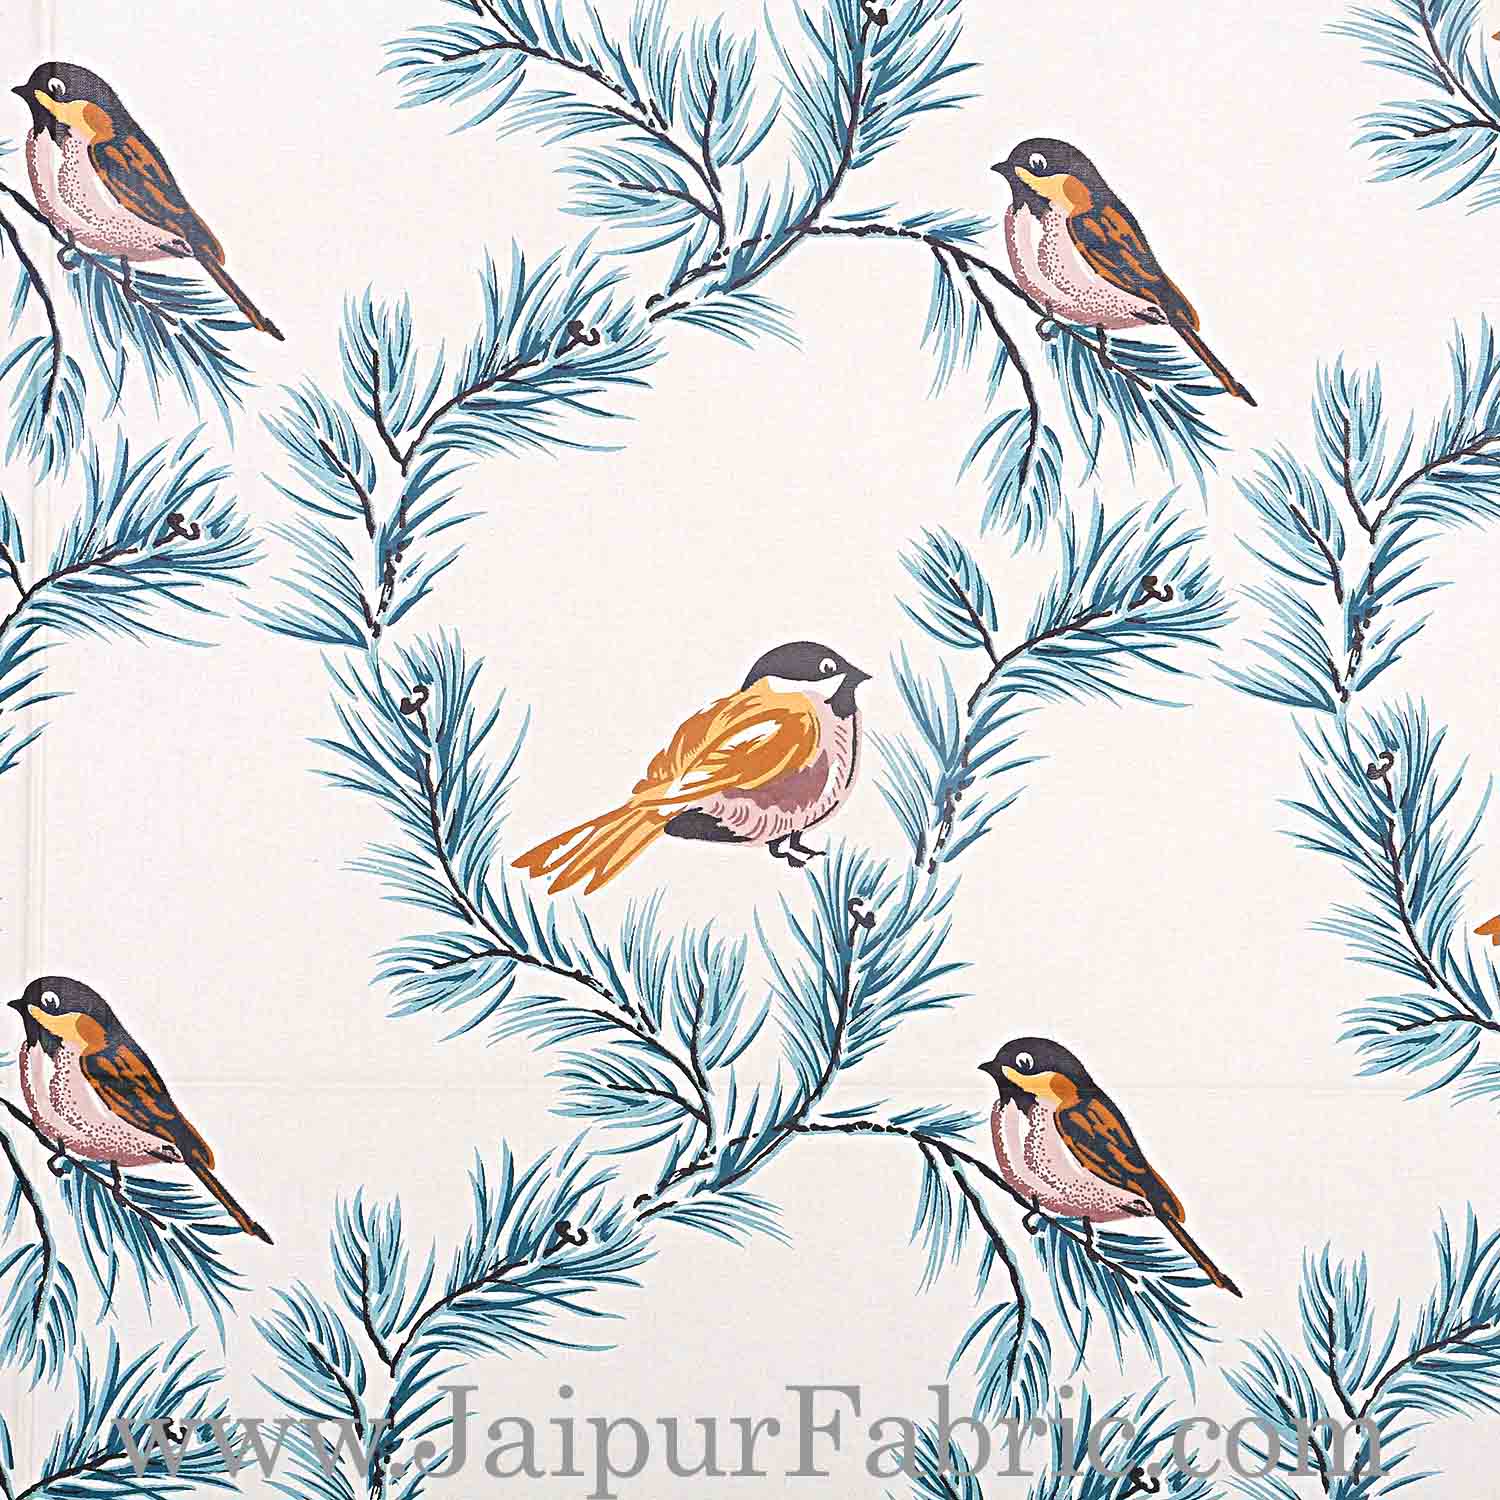 Pure Cotton 240 TC Double bedsheet indian bird print blue